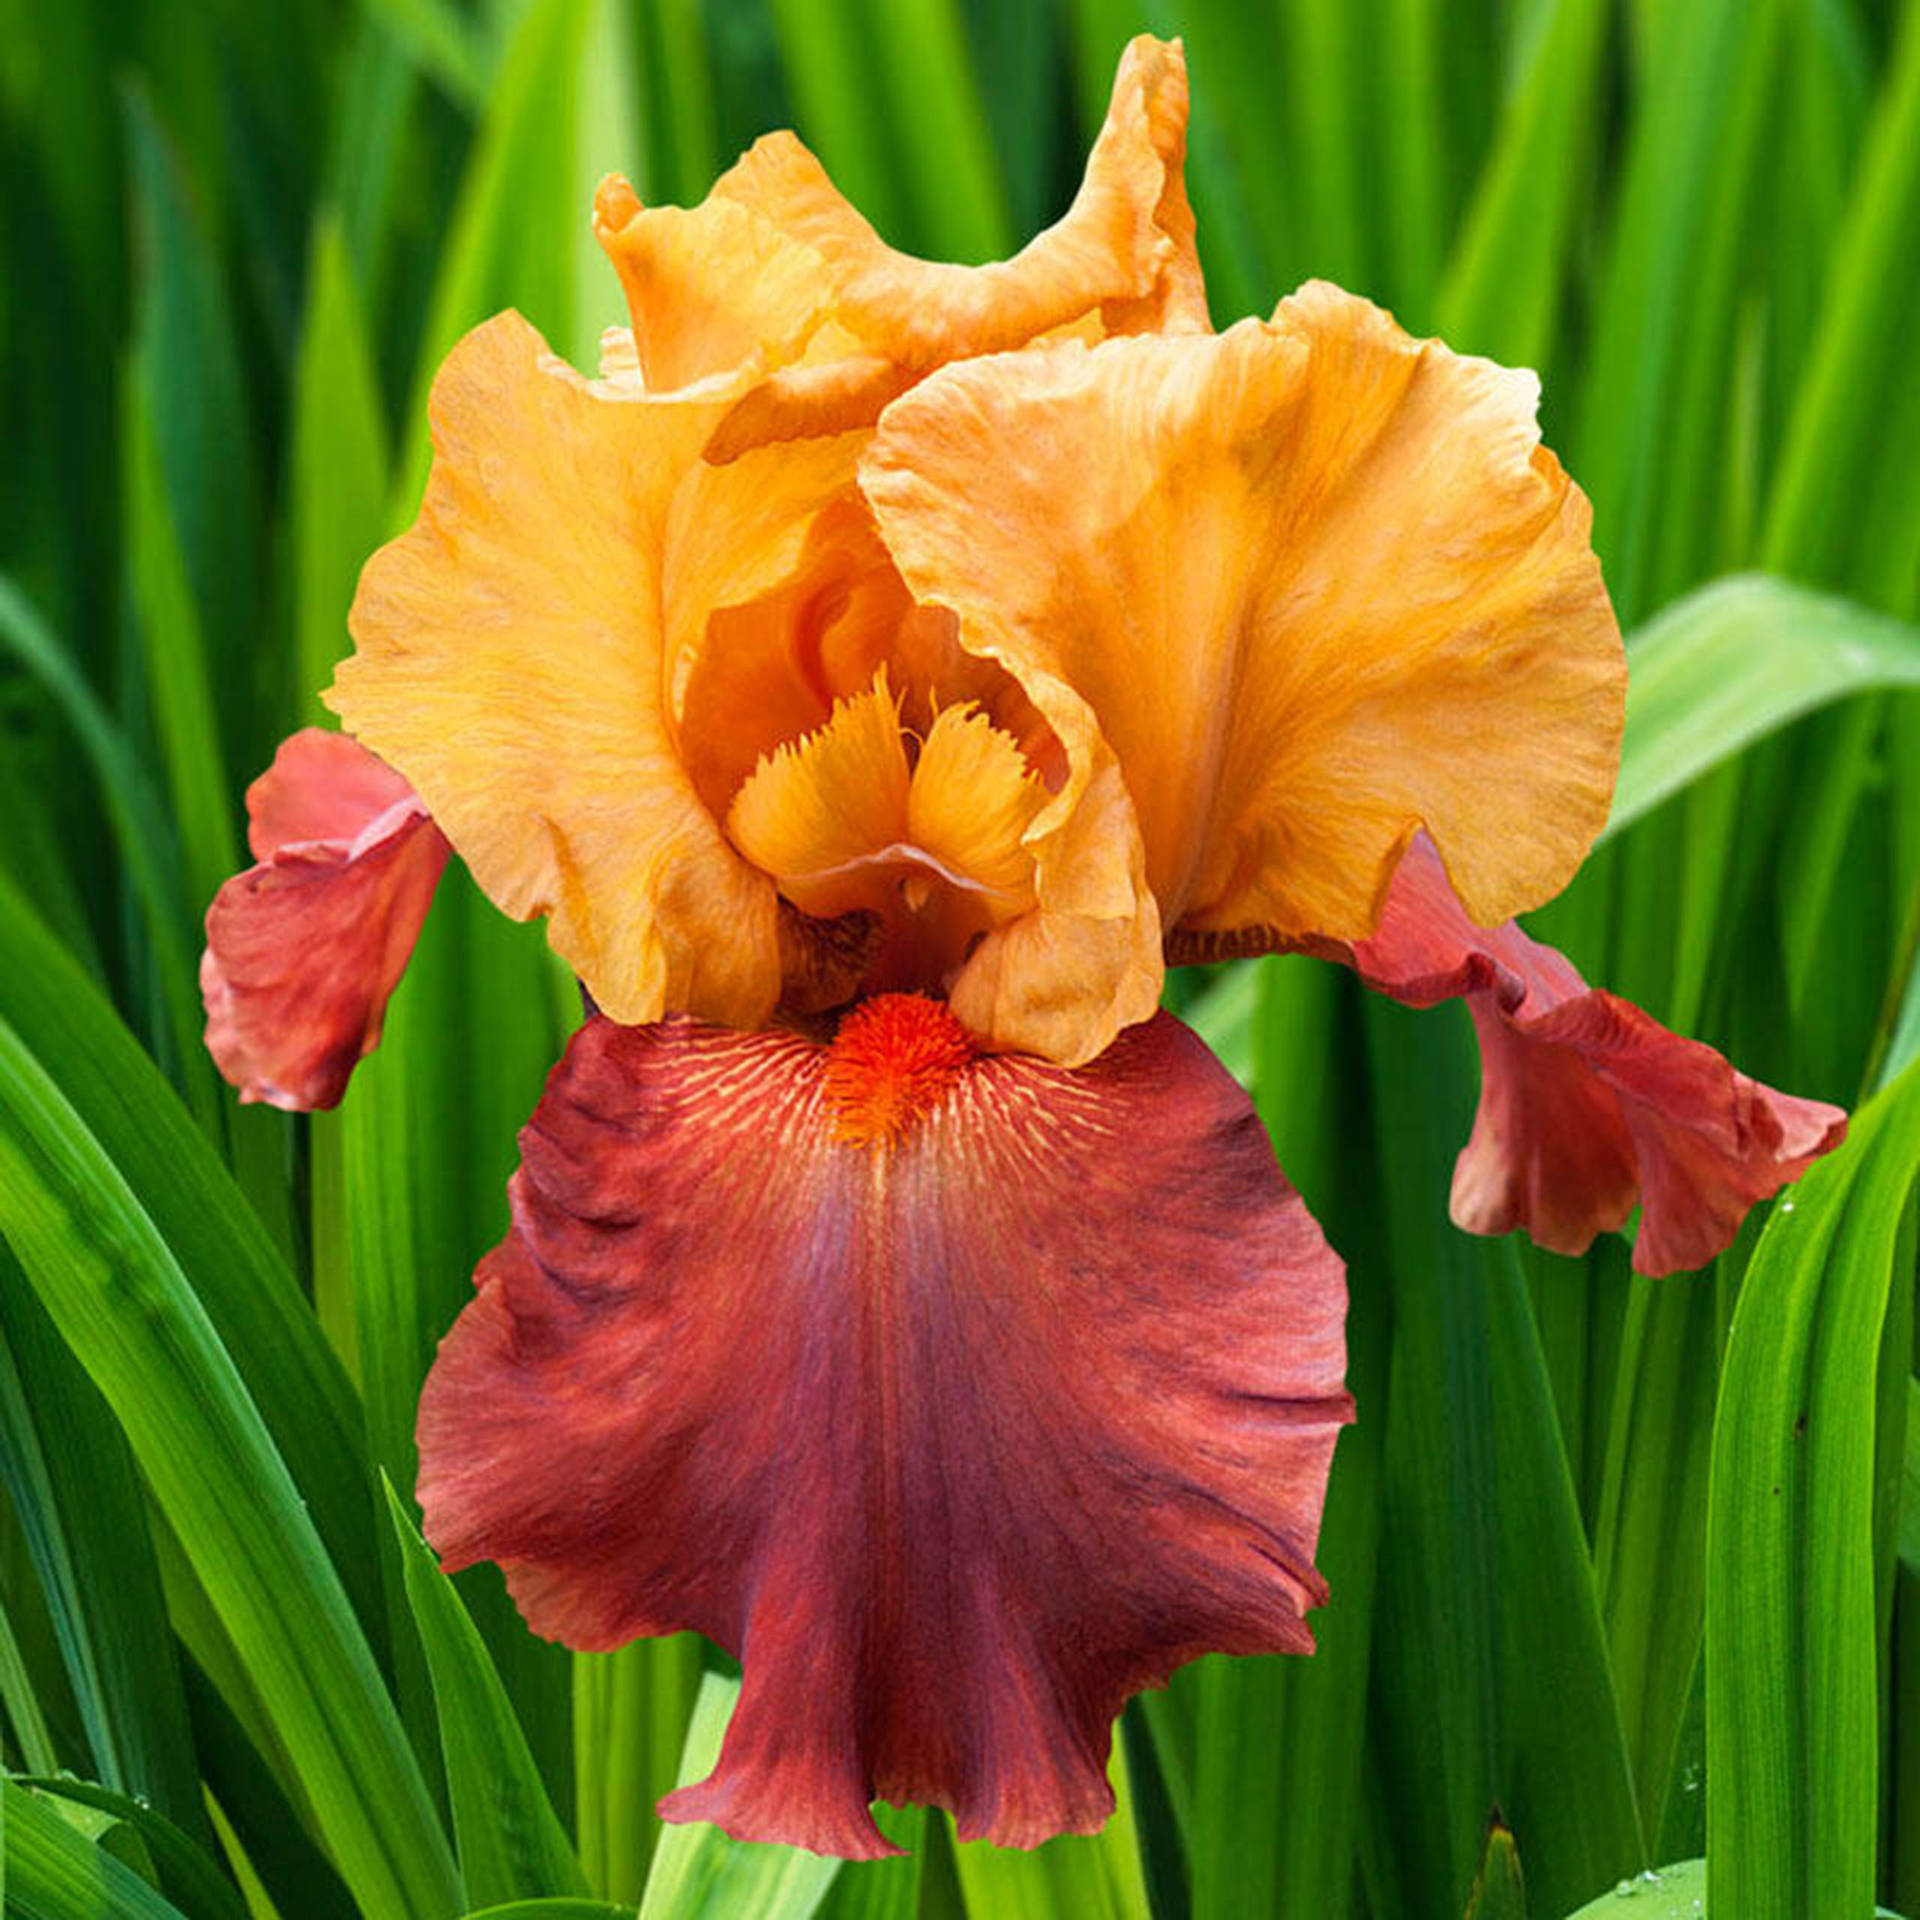 Caption: Stunning Shot Of A Reblooming Iris Flower Background